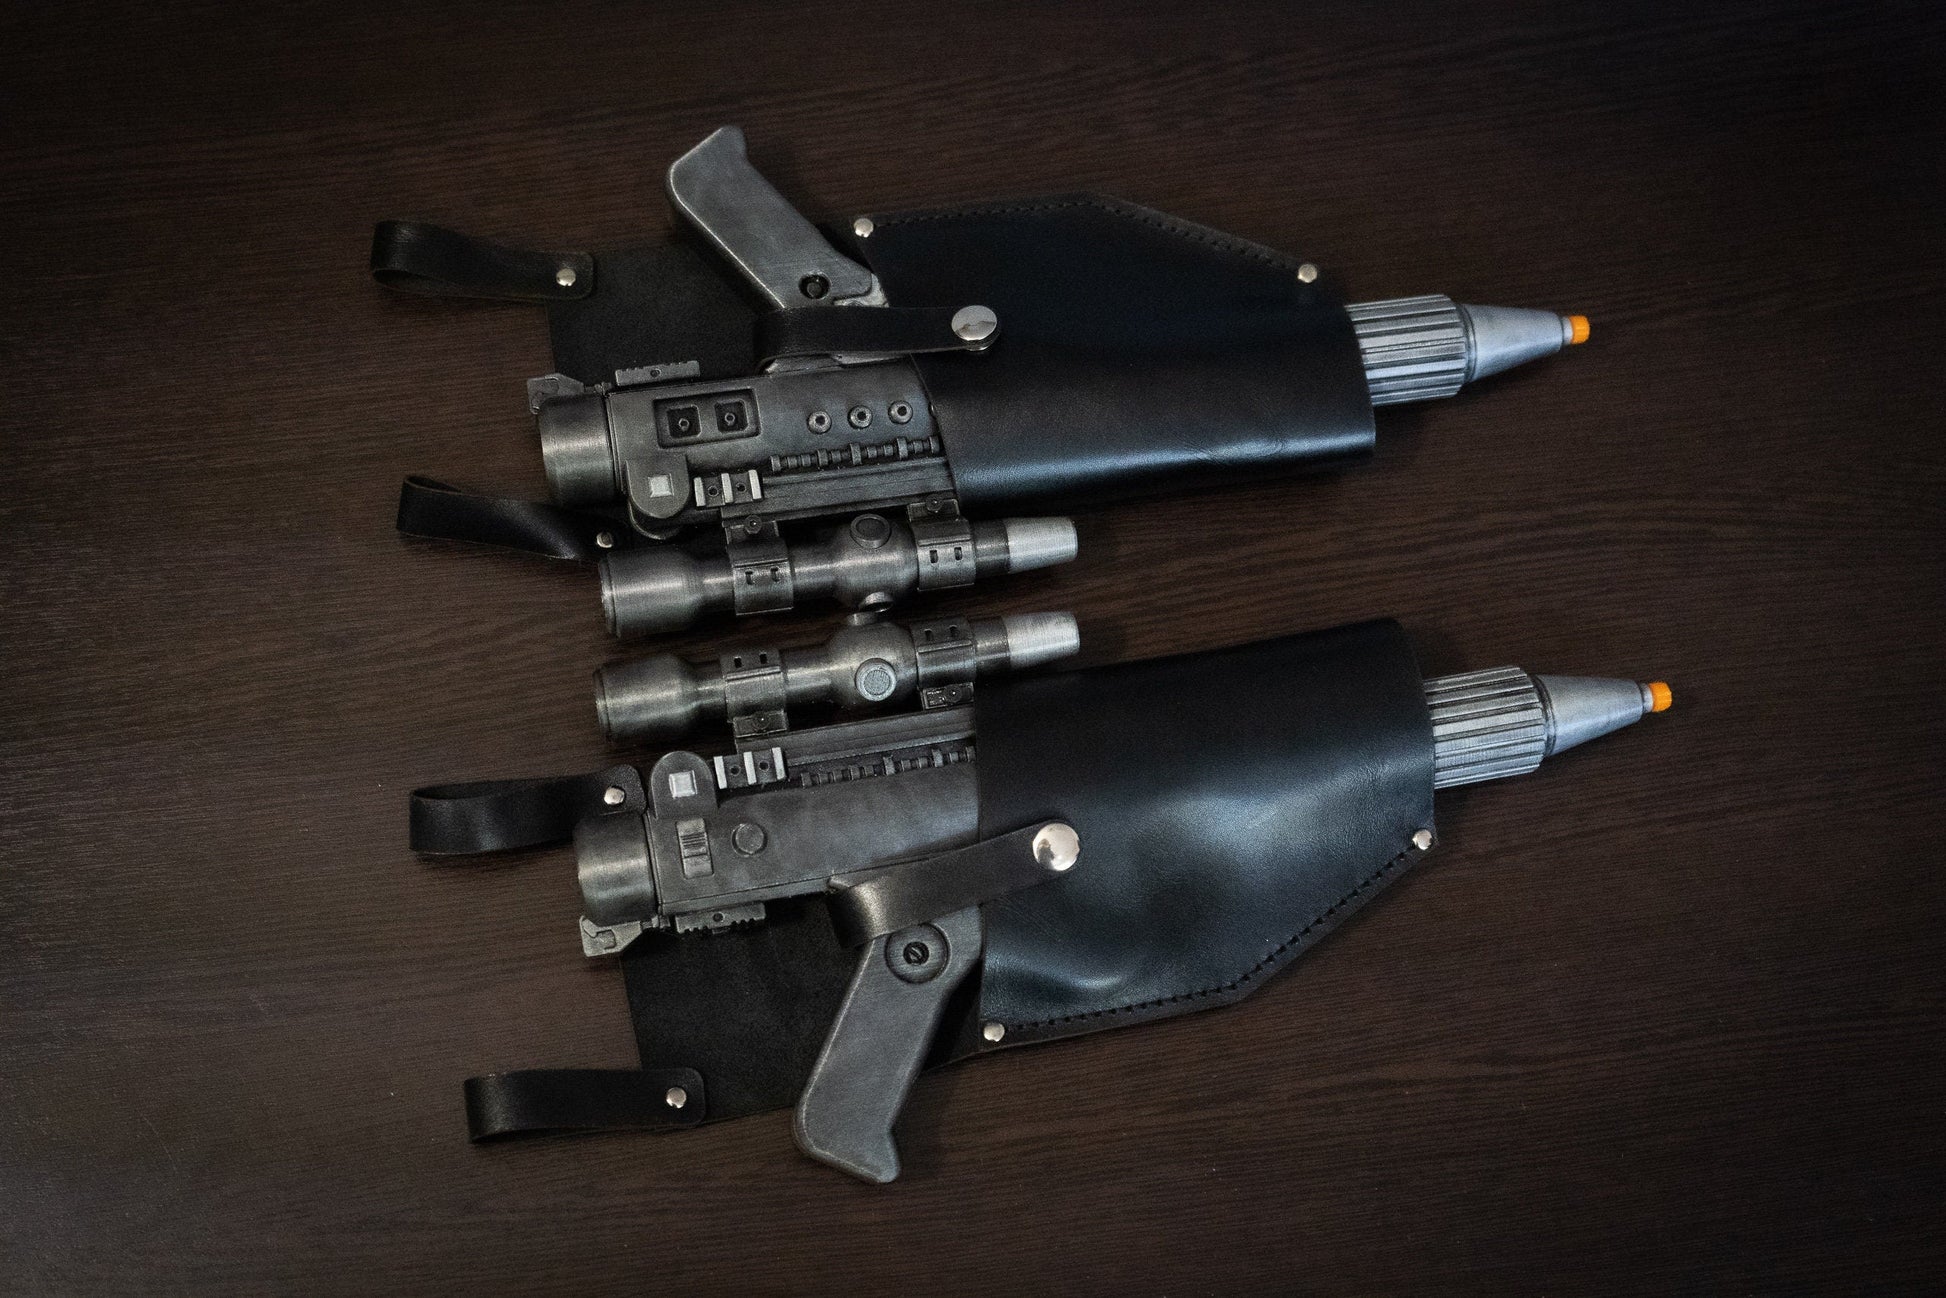 DH-17 blaster pistol | Star Wars Replica | Star Wars Props | Star Wars Cosplay holster, stand - 3DPrintProps